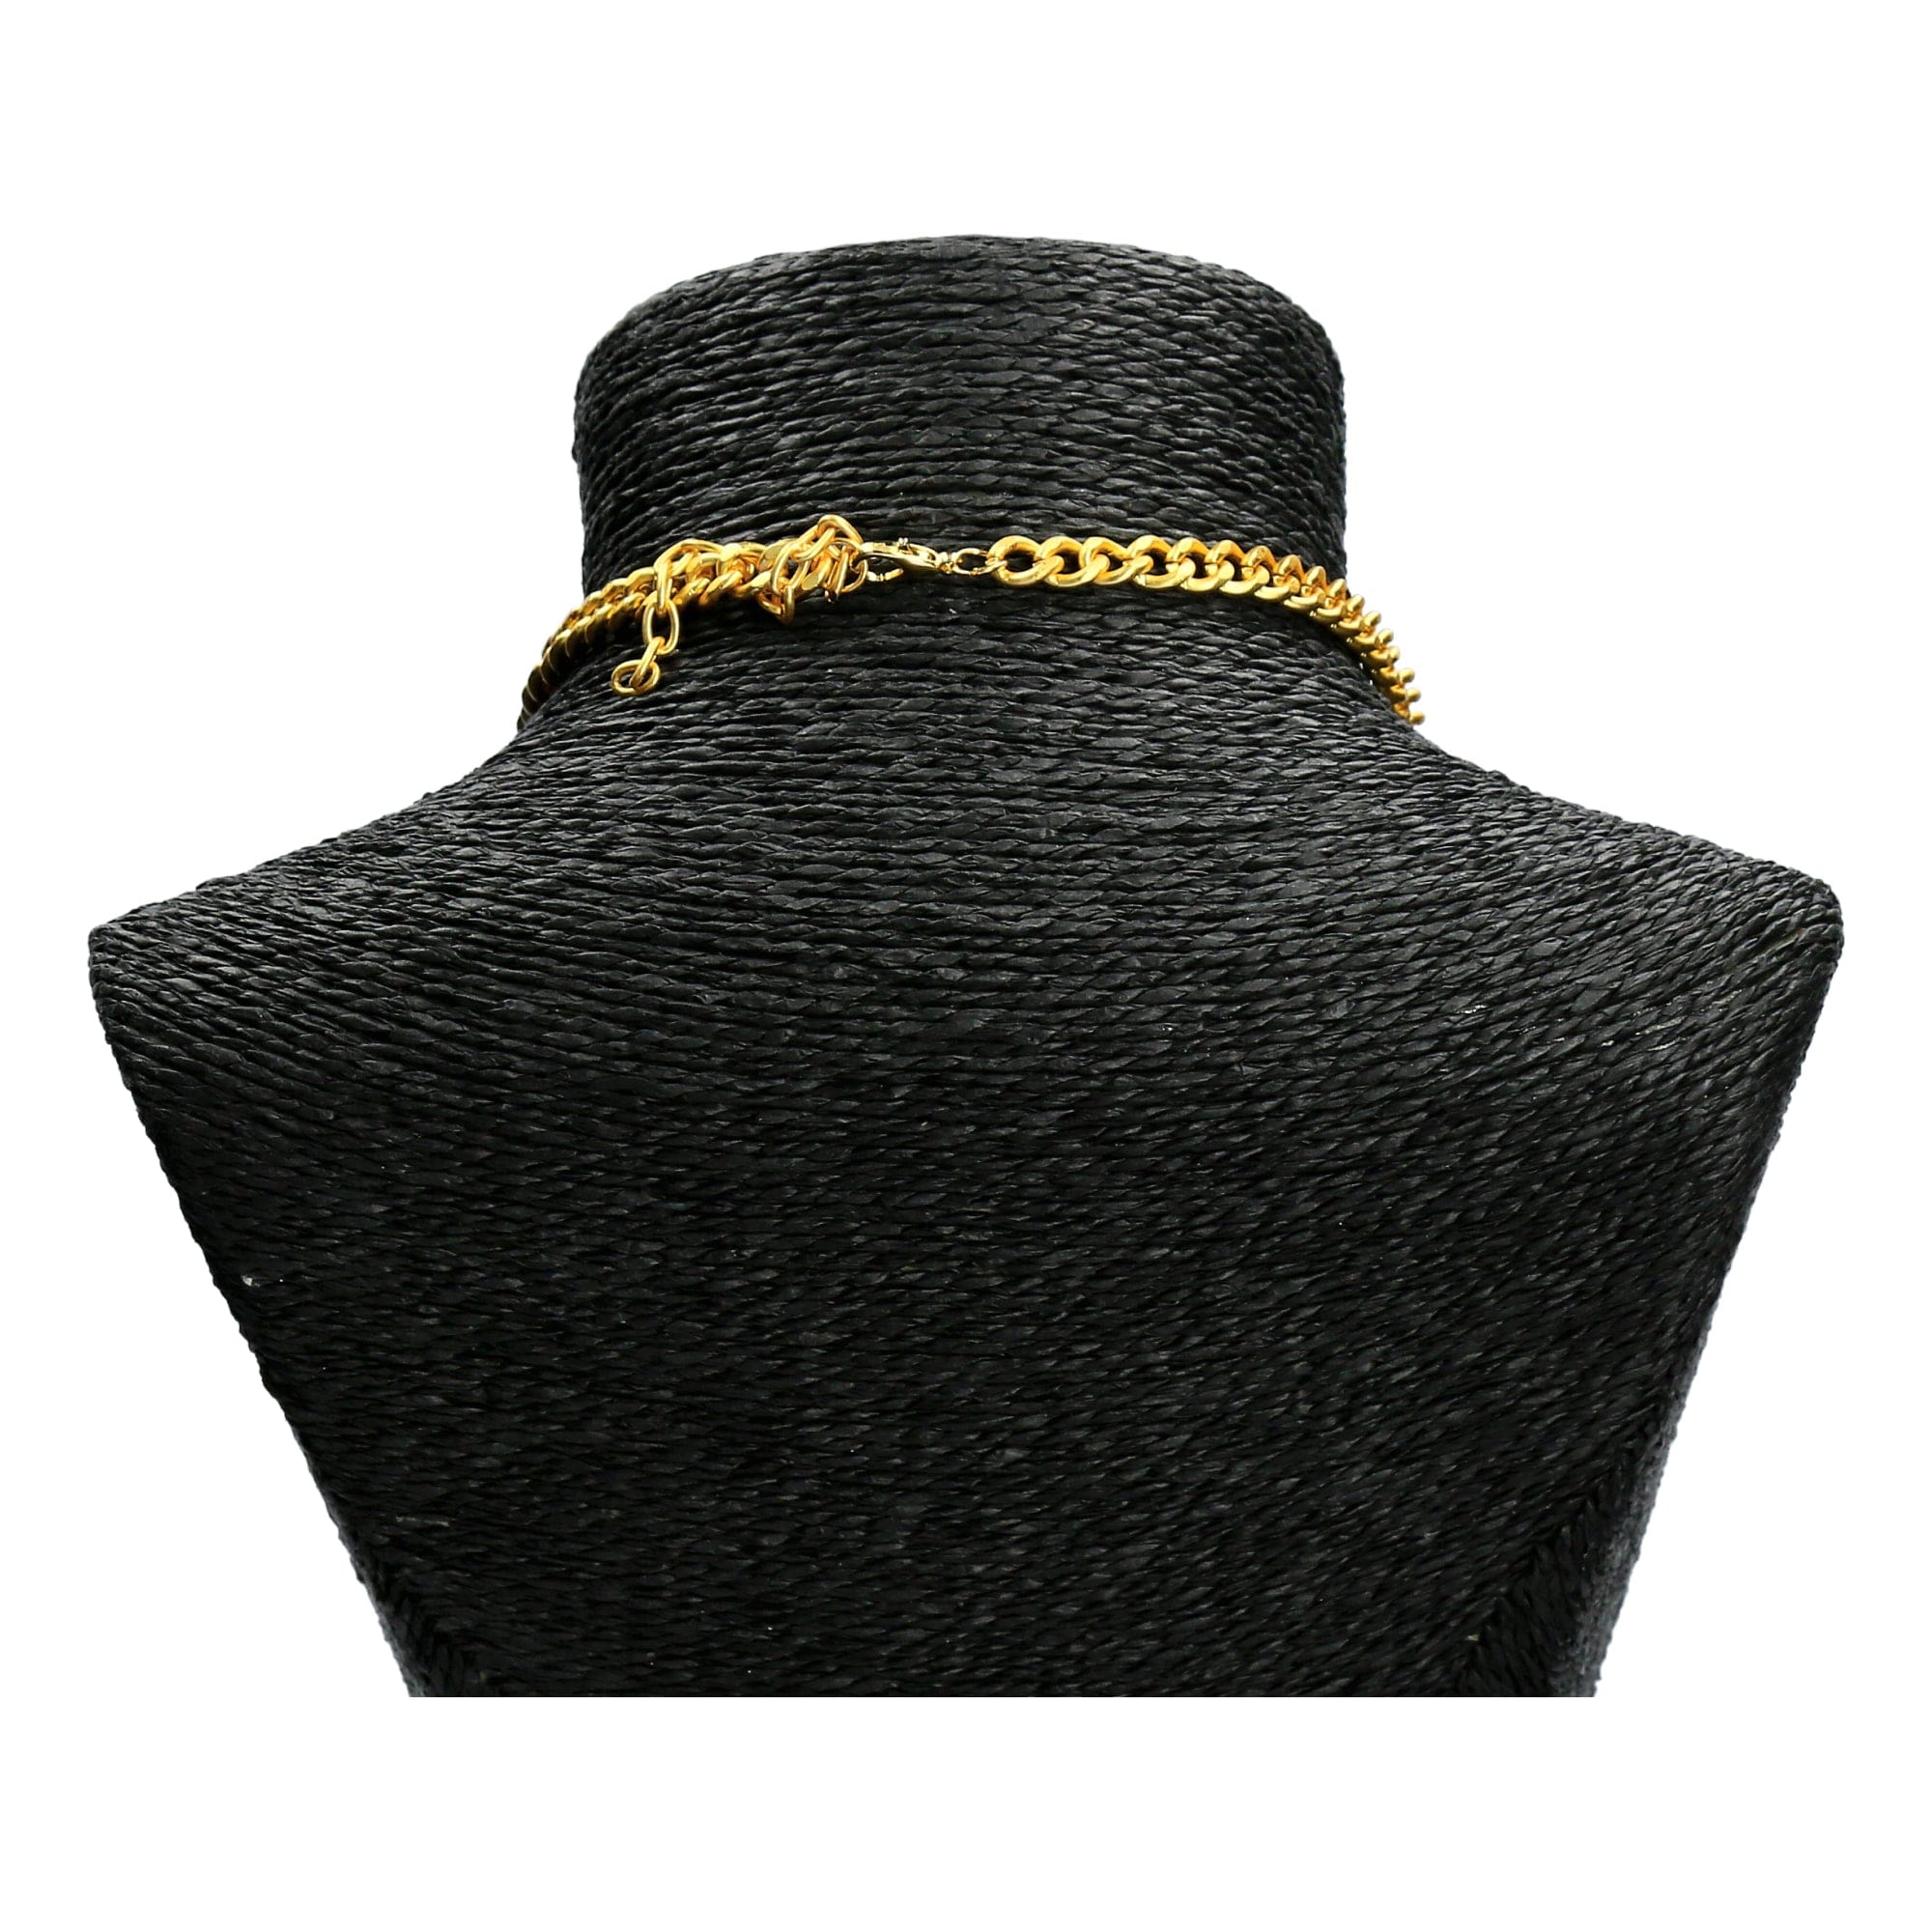 Lisbeth jewelry set - Necklace